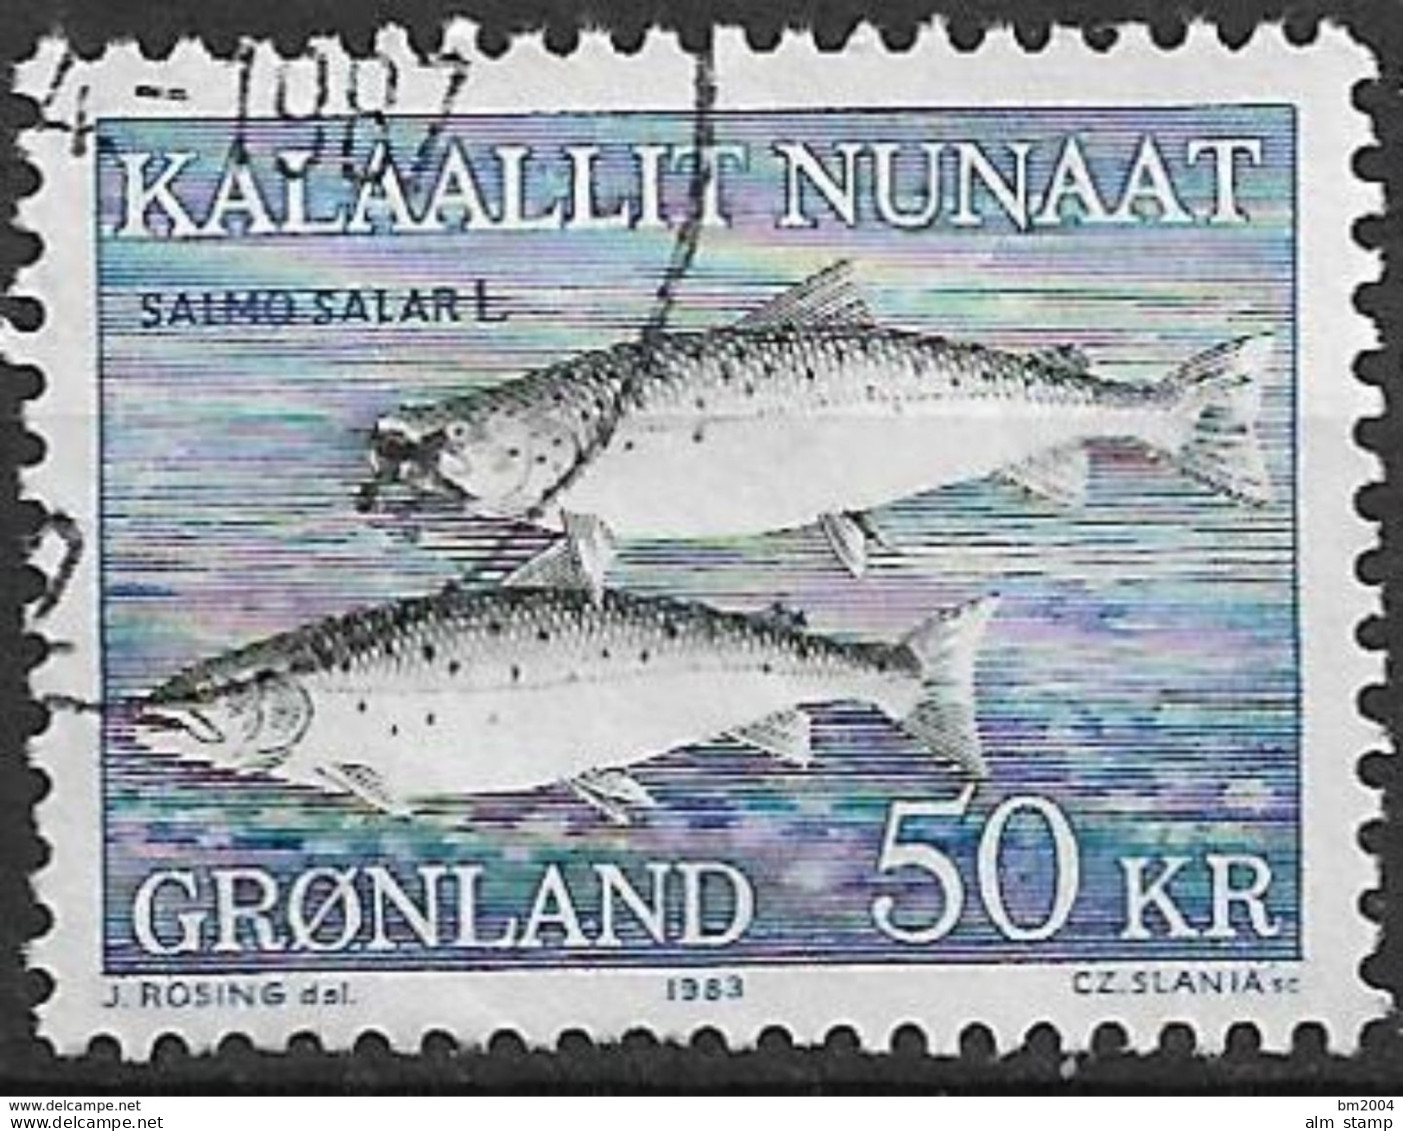 1983 Grönland Mi. 140 Used Atlantischer Lachs (Salmo Salar) - Gebruikt